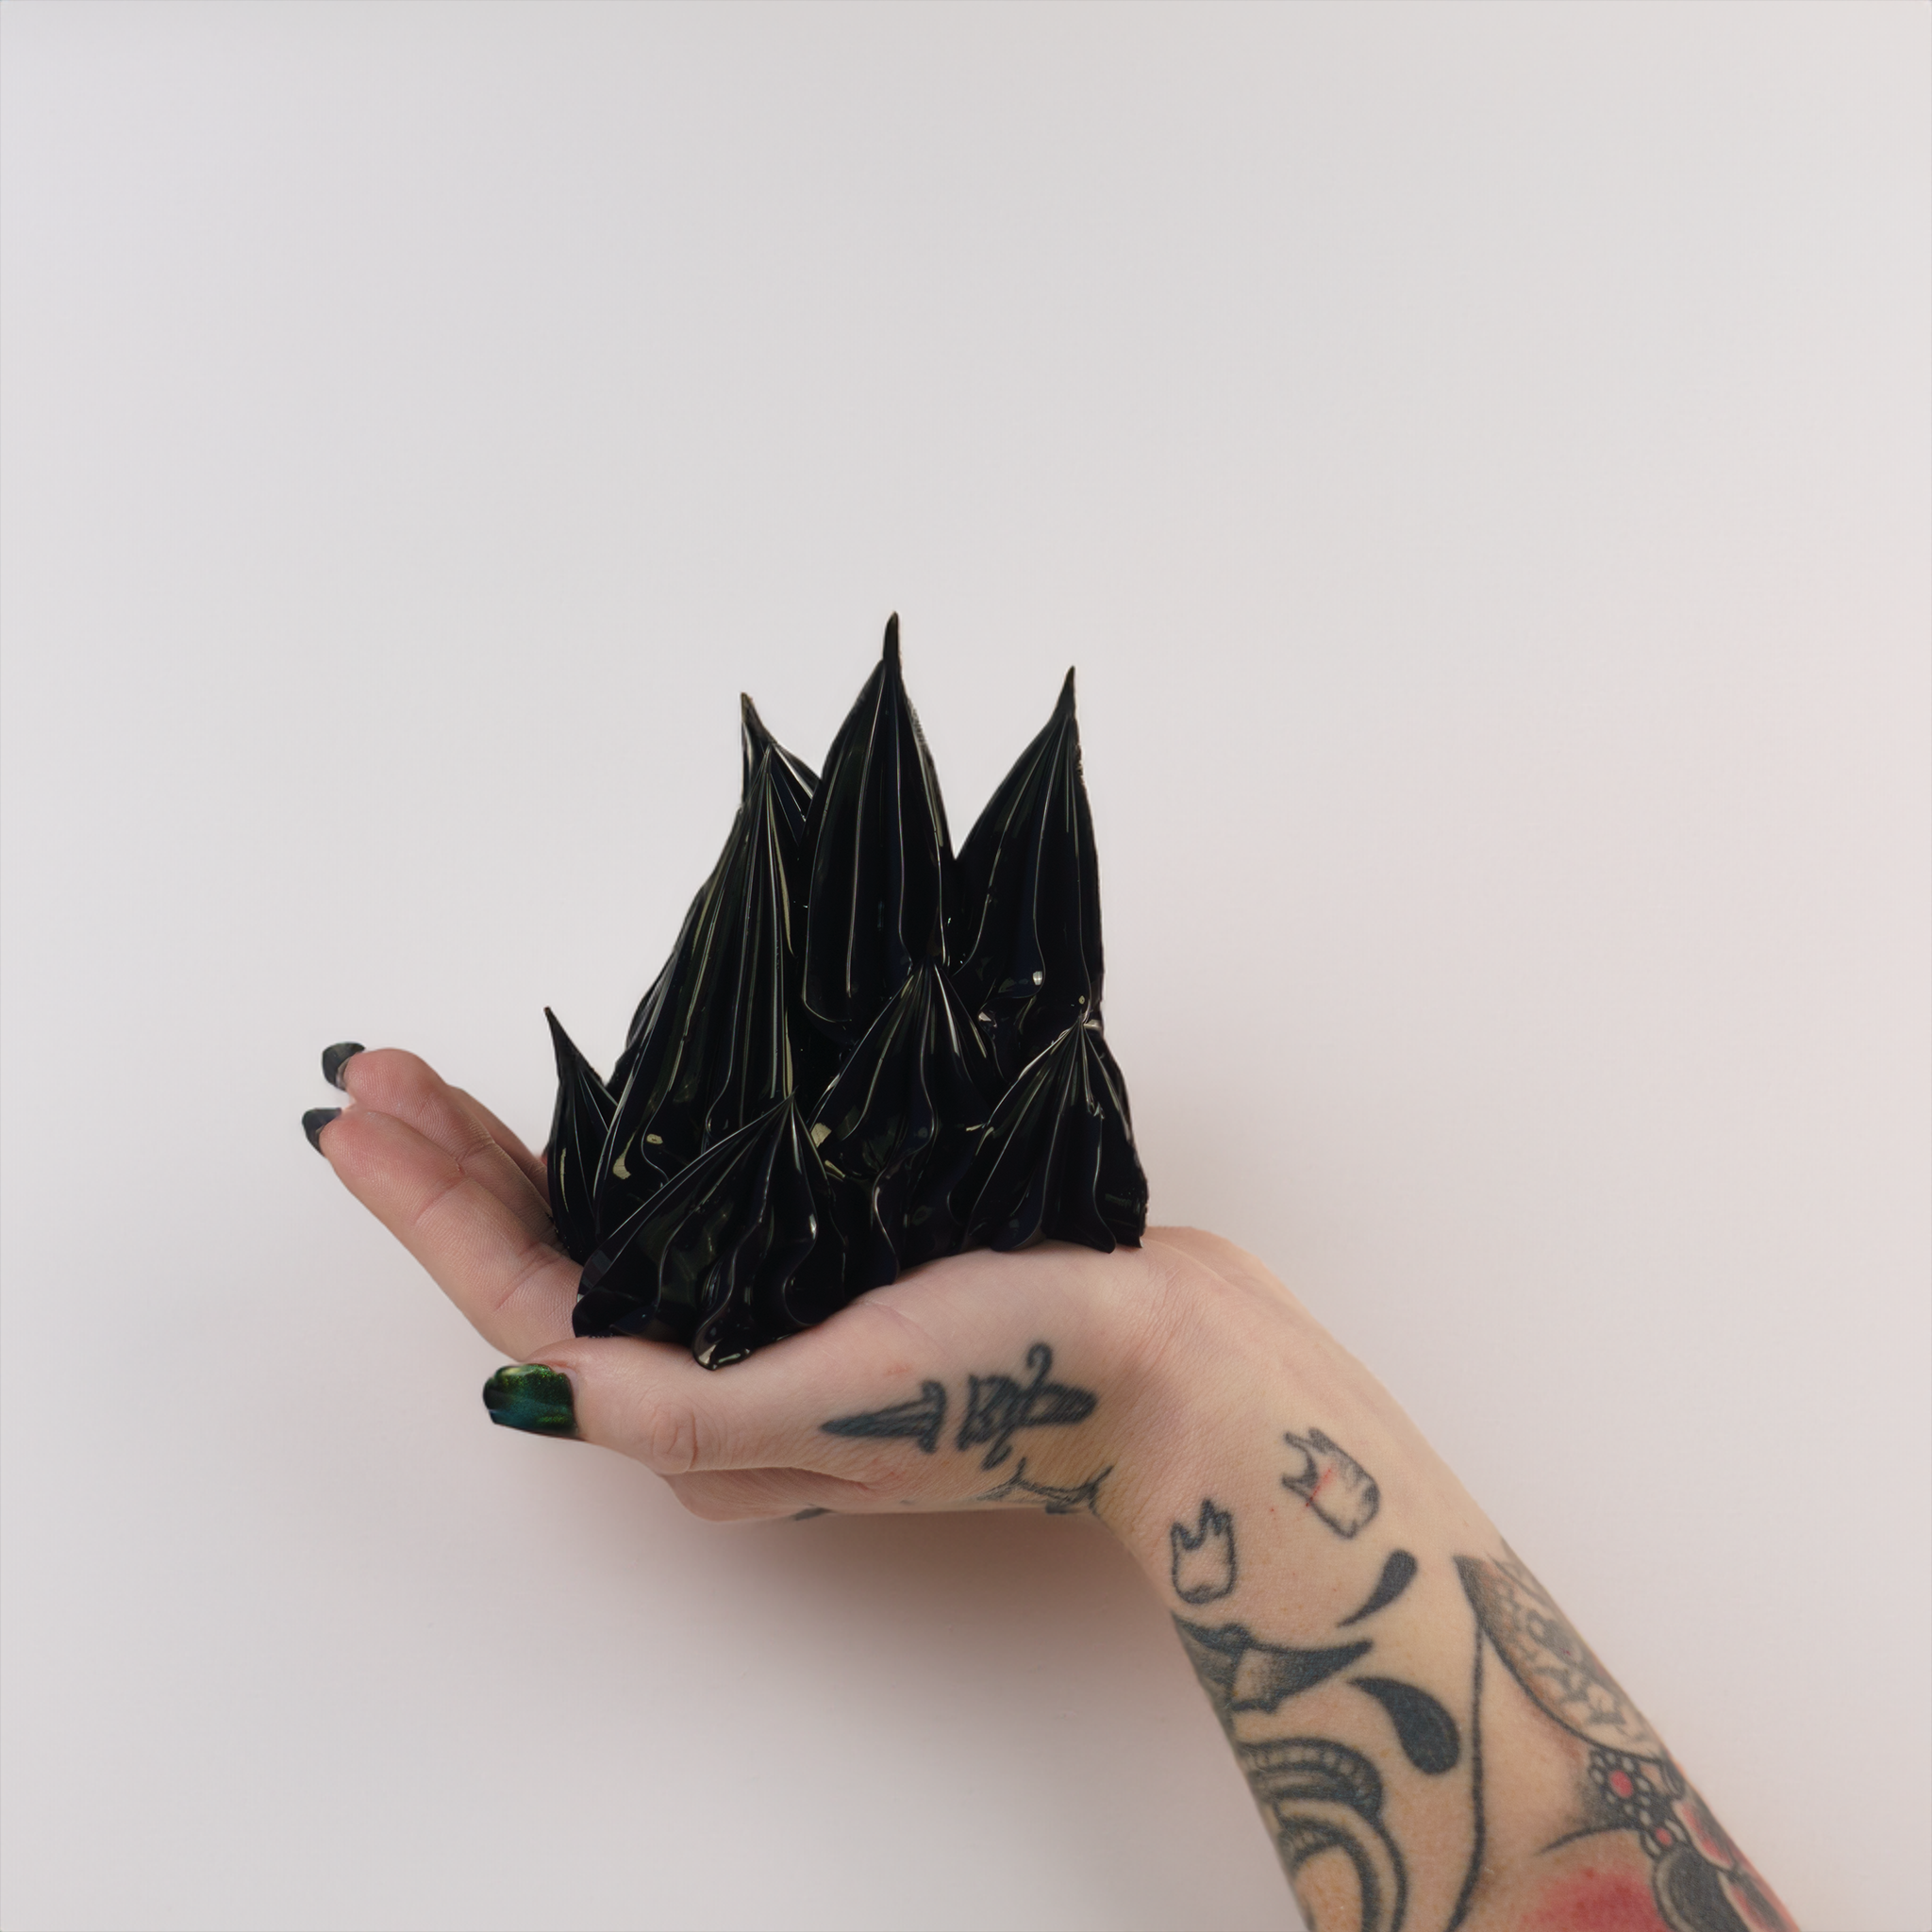 Carbon Black Heavy Texture - Gaffrey Art Material